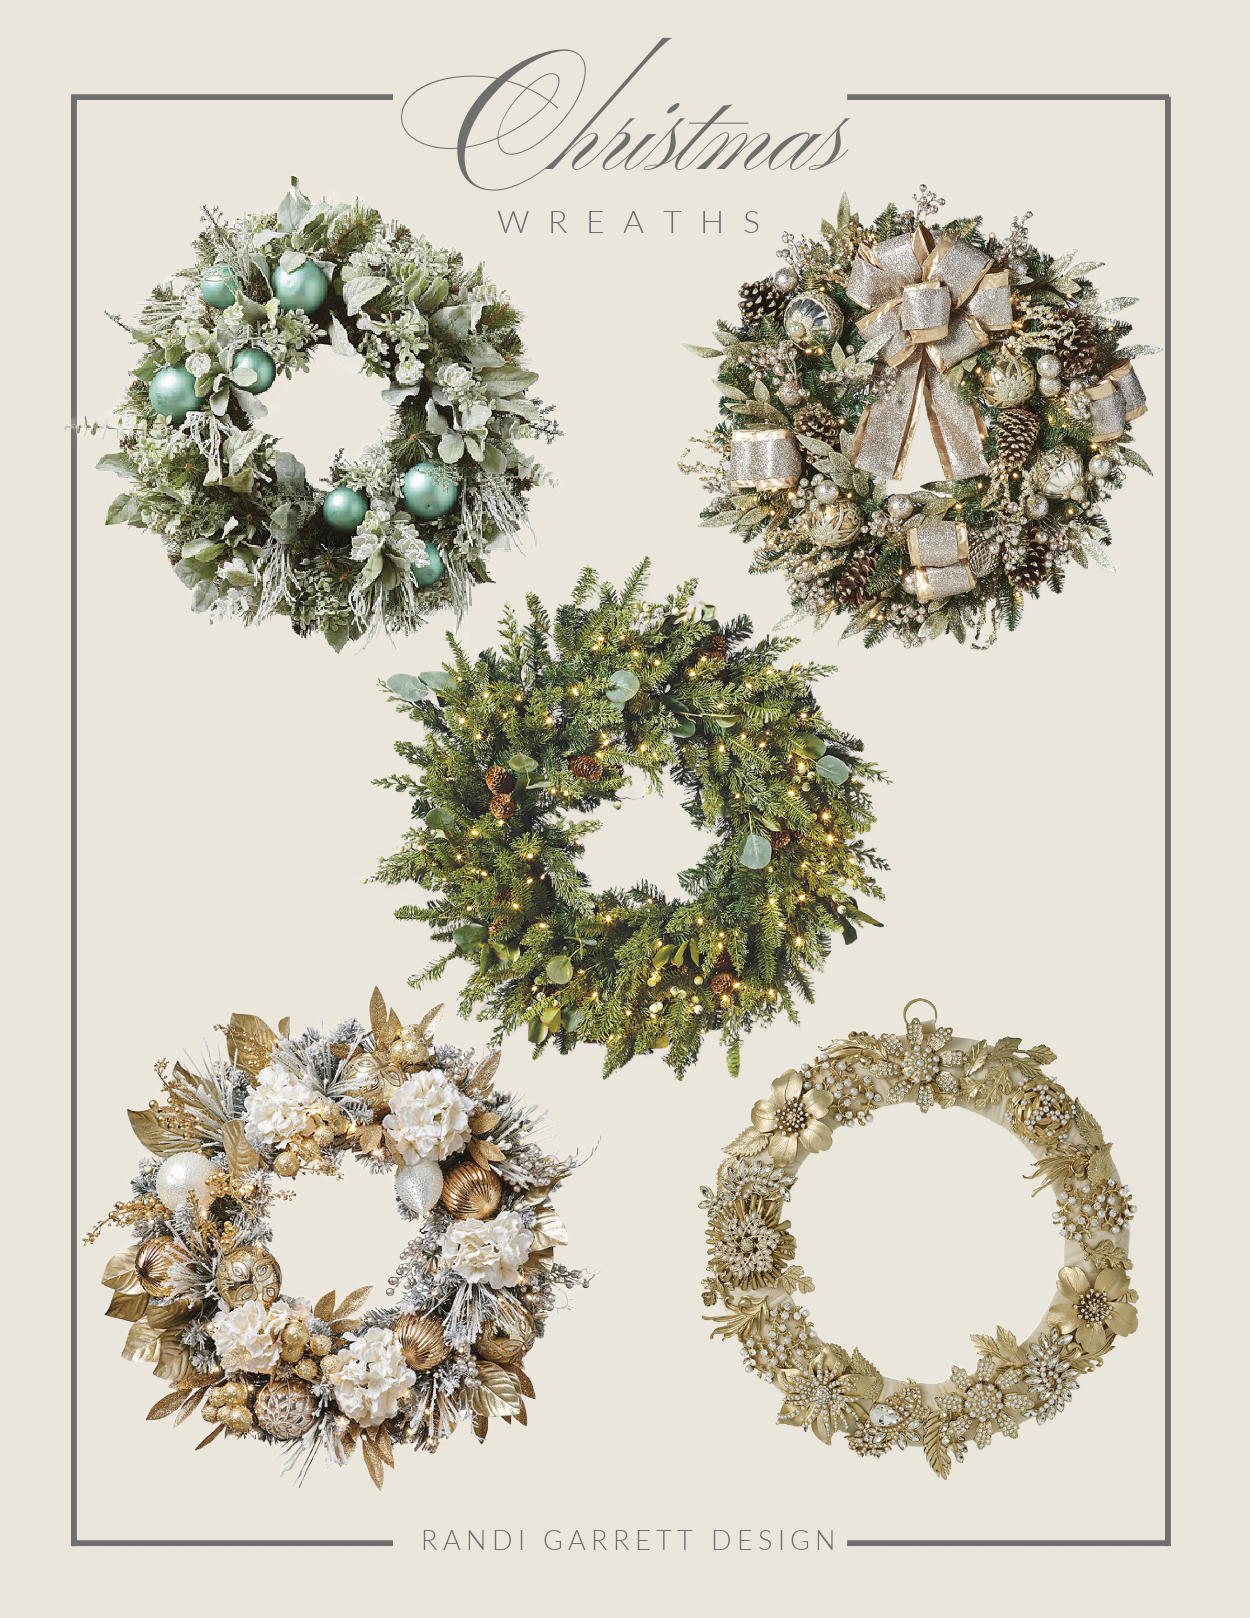 The best Christmas wreaths 